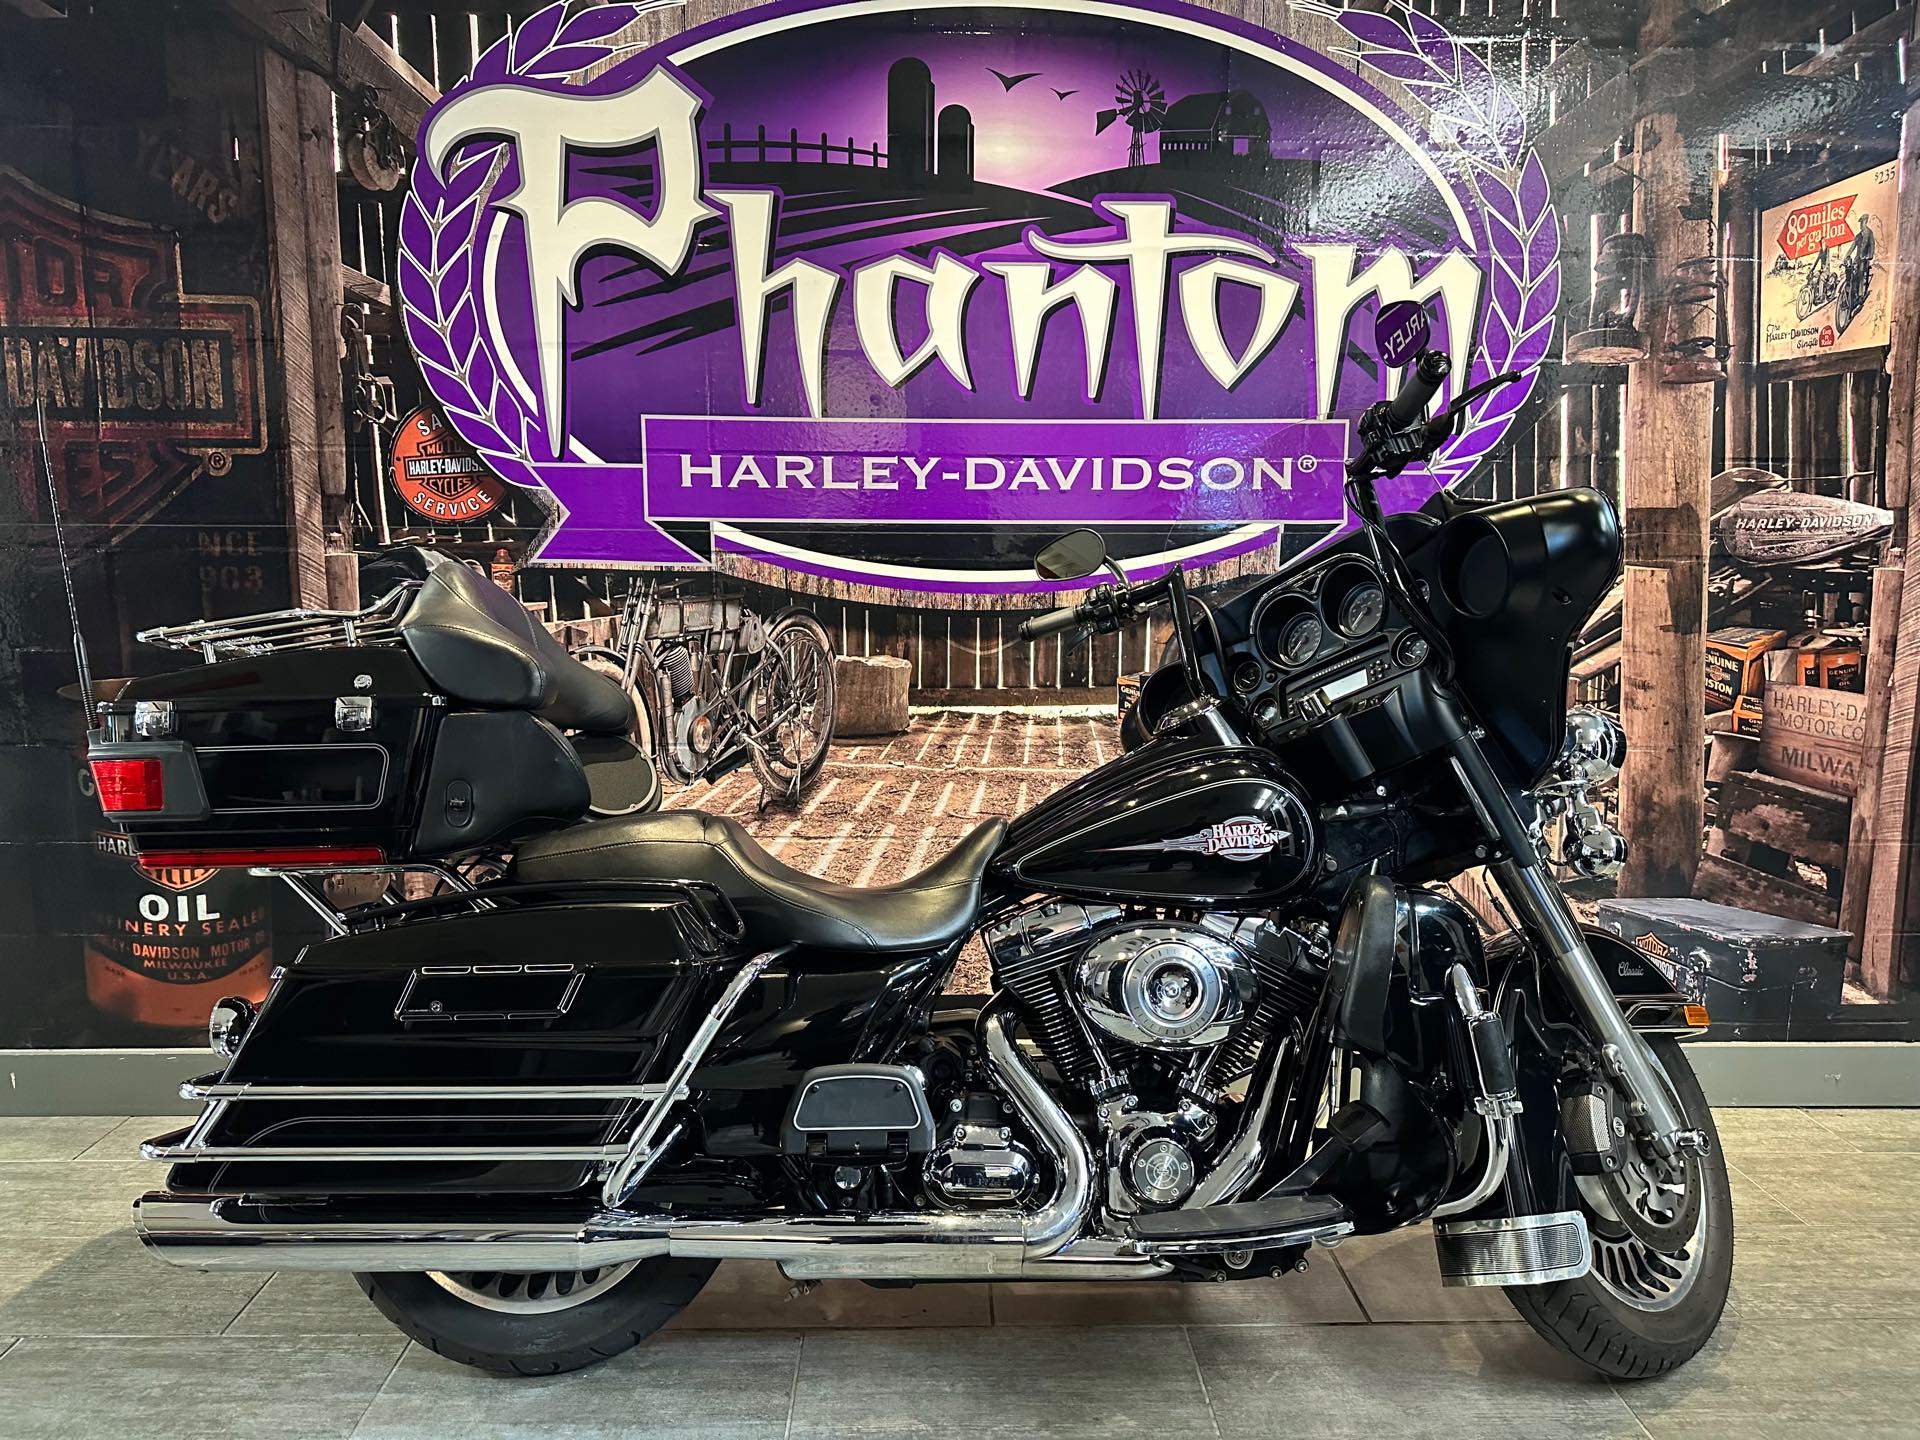 2010 Harley-Davidson Electra Glide Classic at Phantom Harley-Davidson